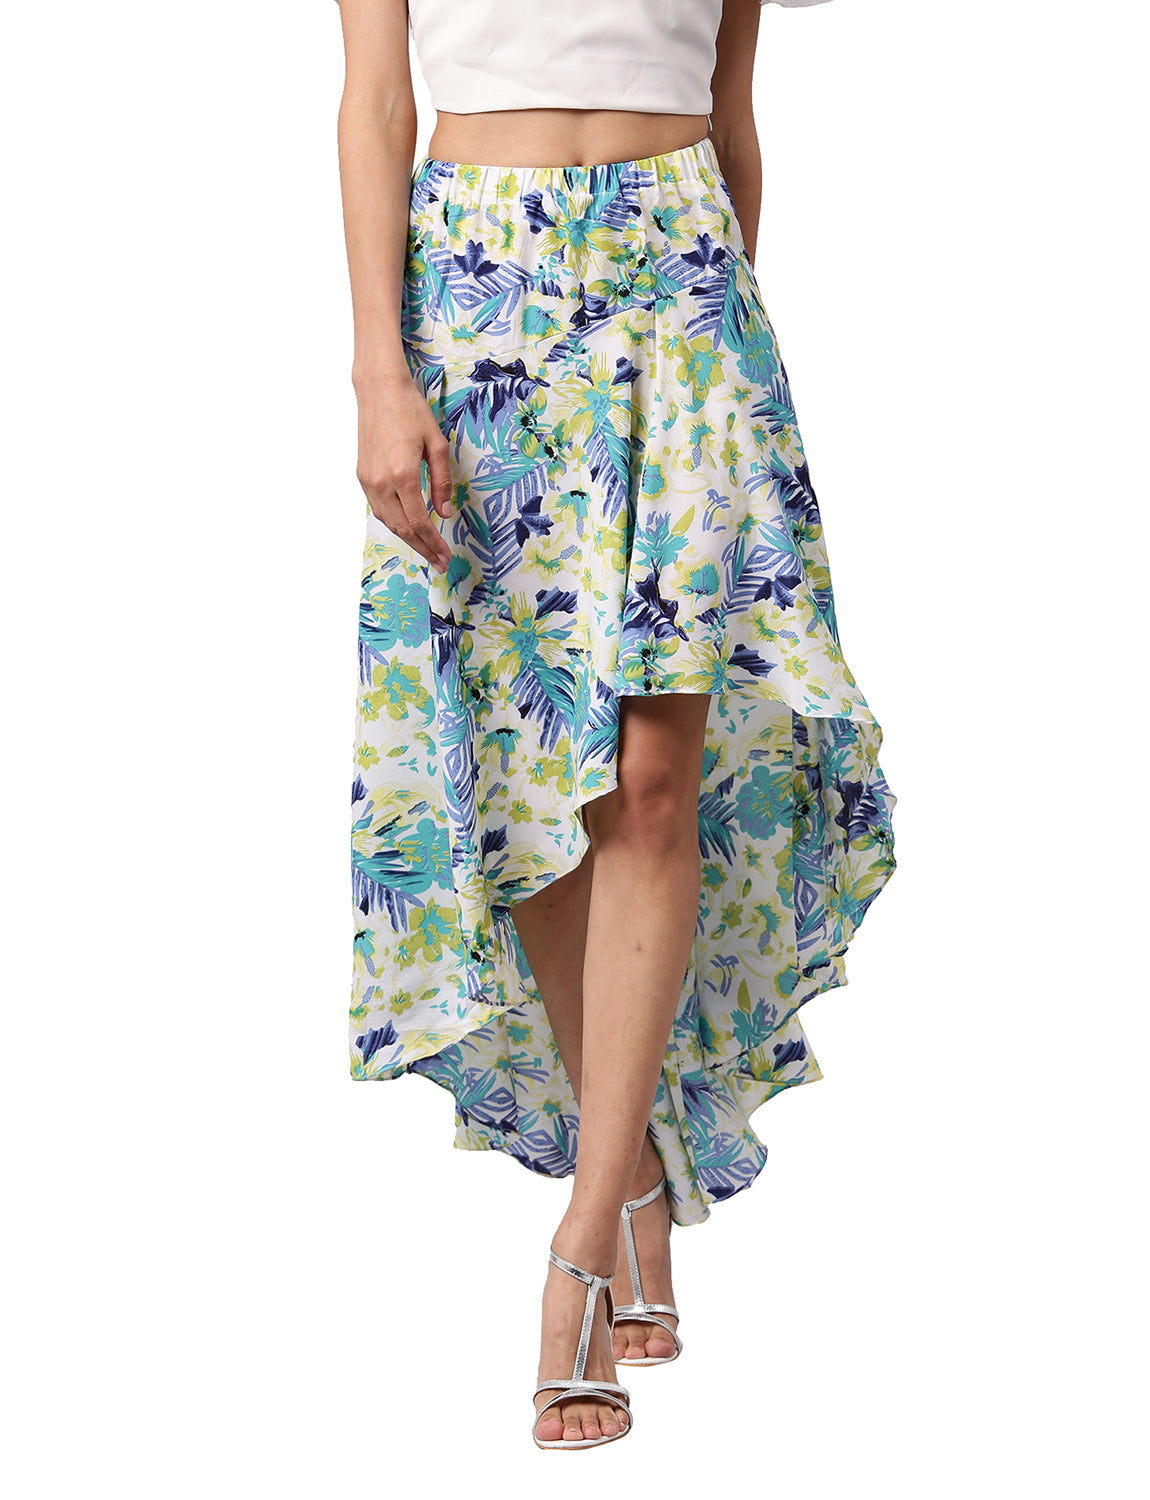 Athena White & Blue Floral Printed Knee-Length Skirt - Athena Lifestyle